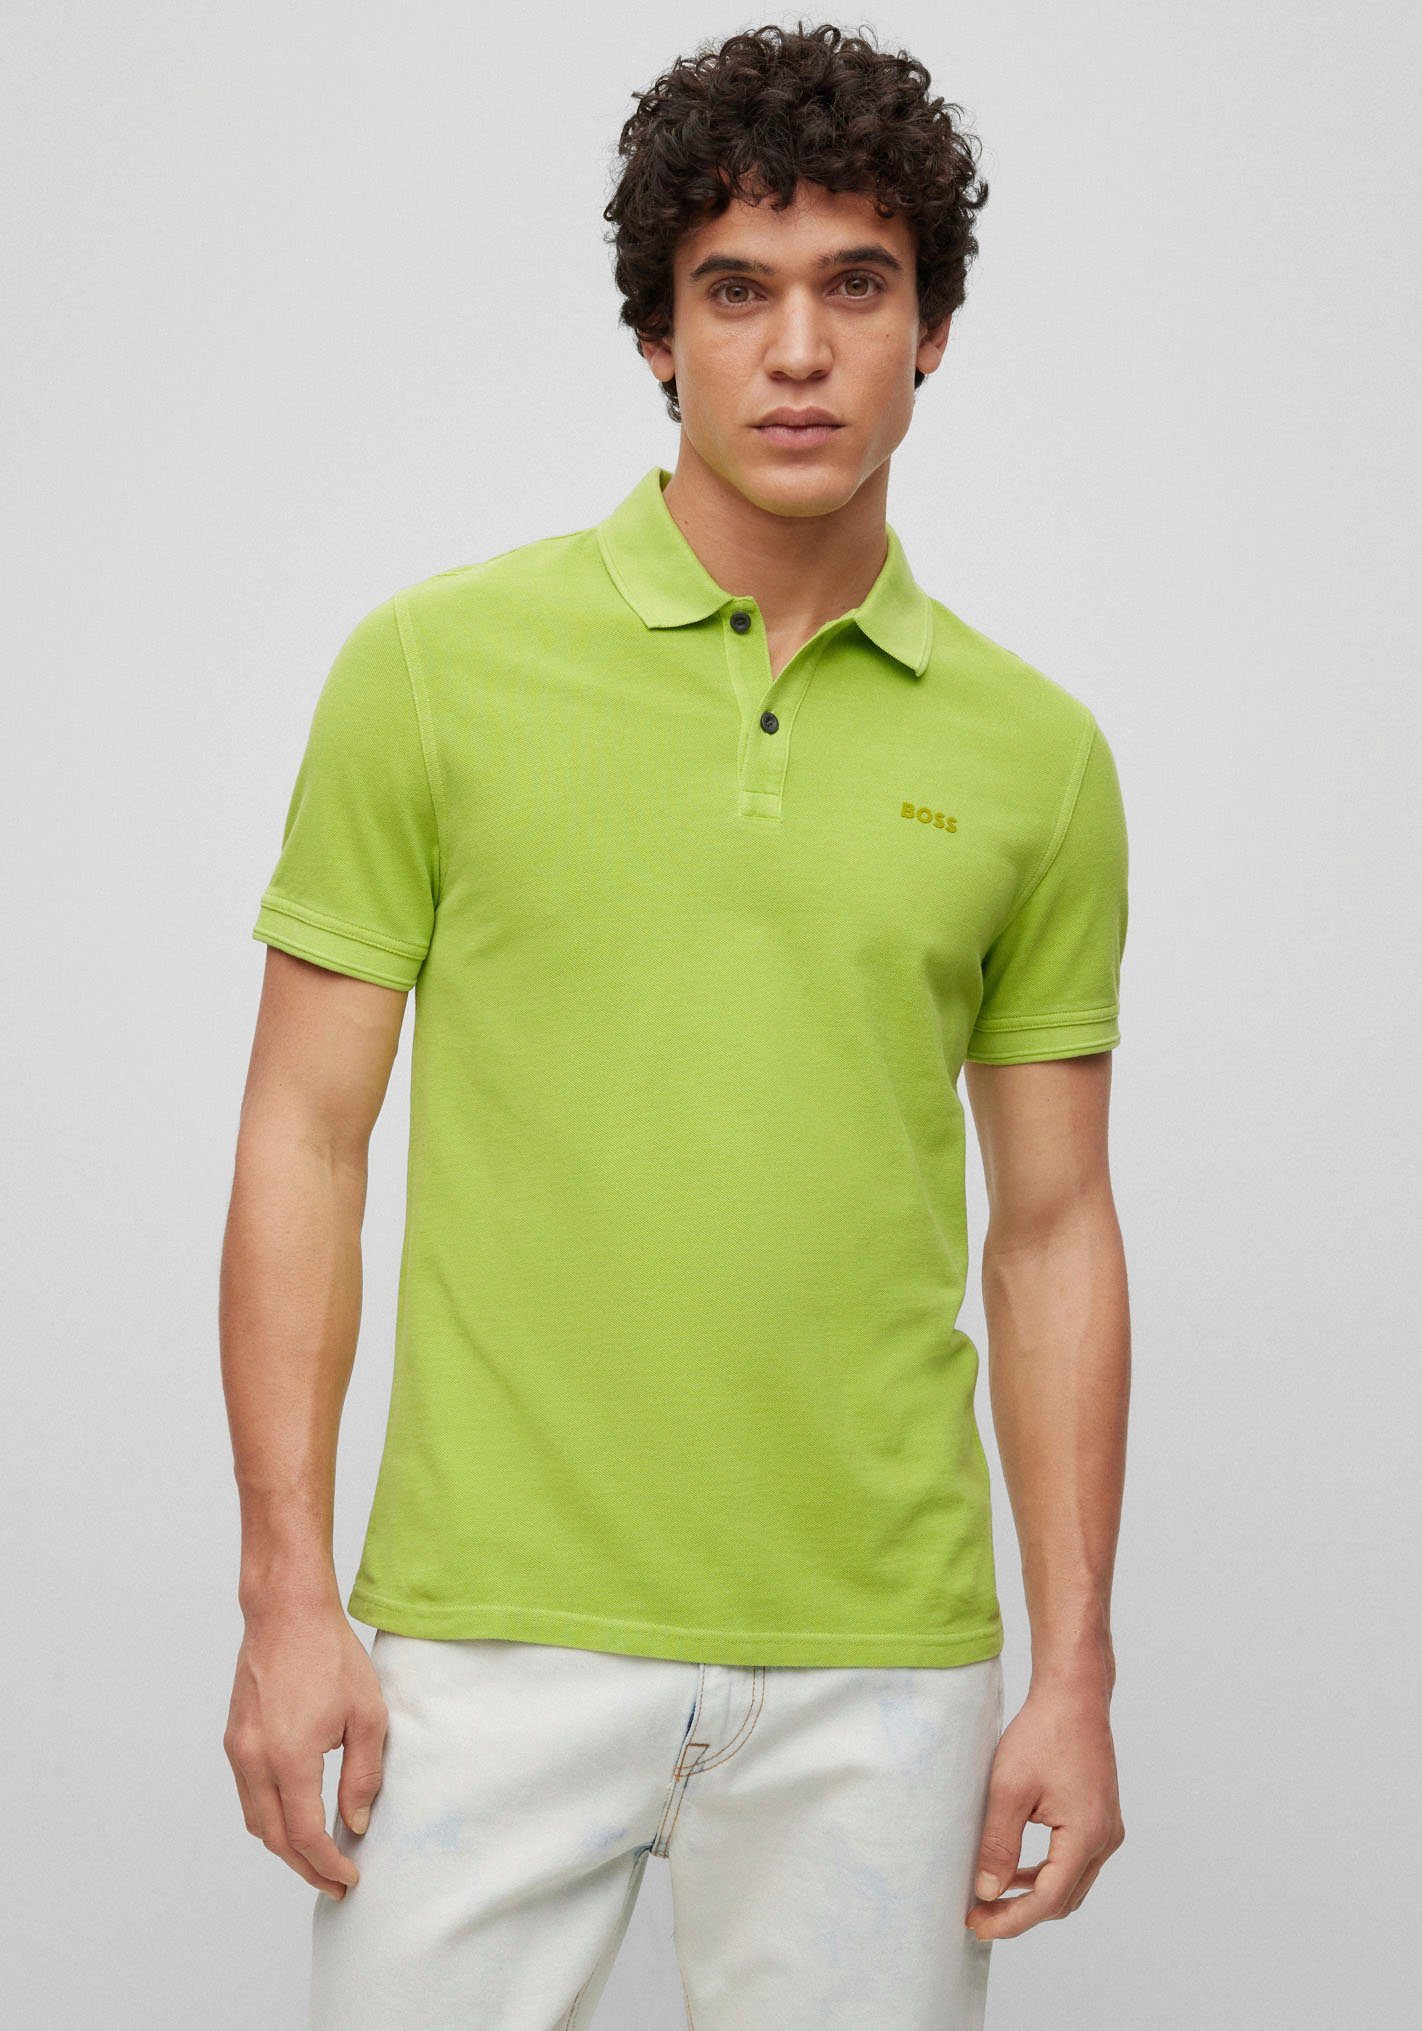 BOSS ORANGE Poloshirt mit Green am Brustkorb Prime Logoschriftzug Bright